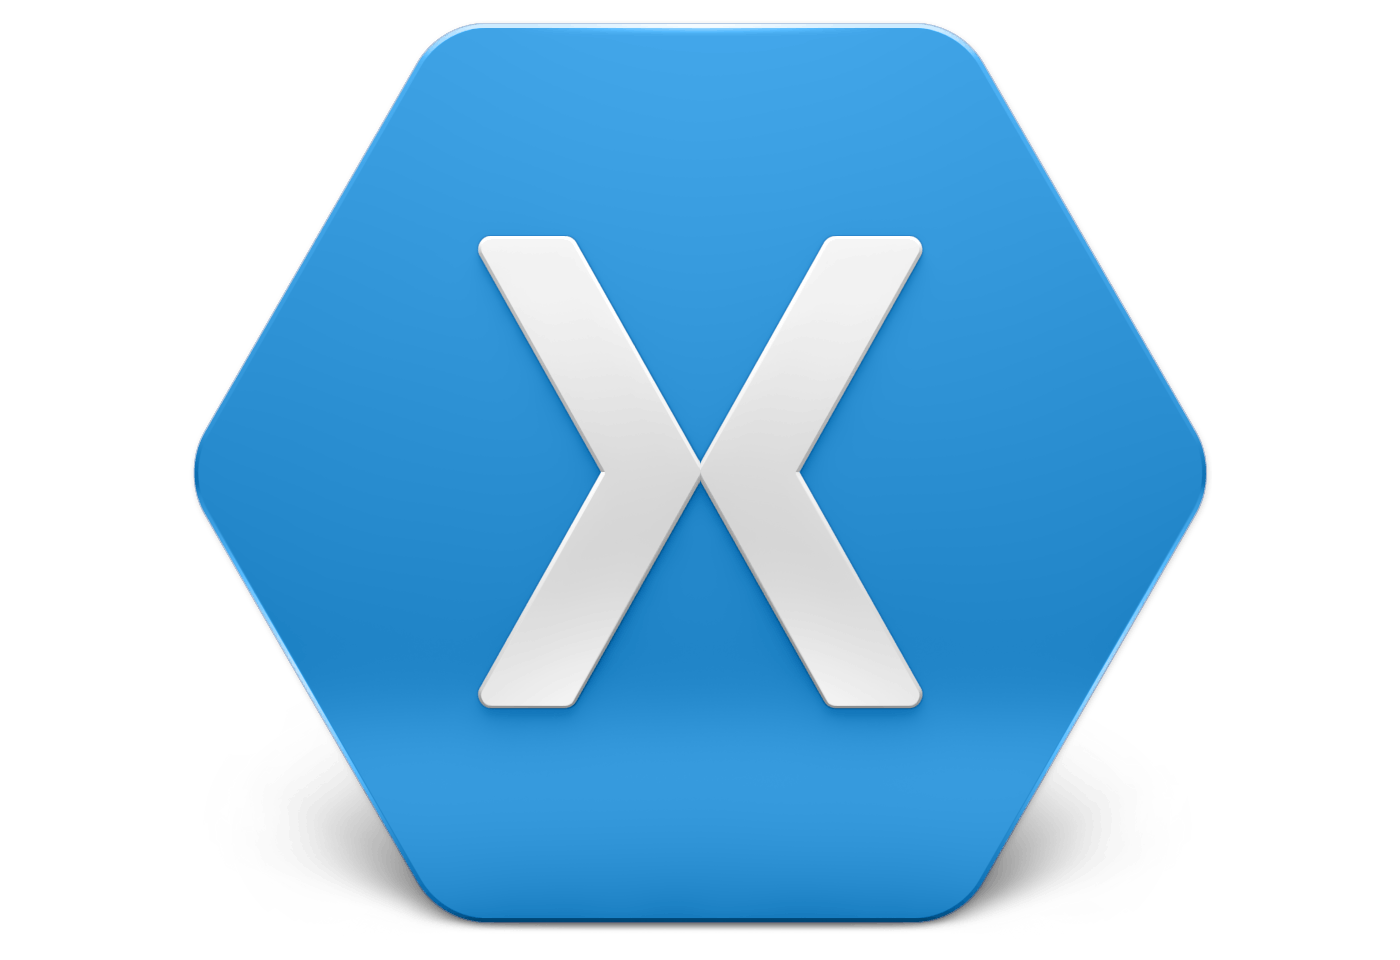 Xamarin Studio macOS application icon